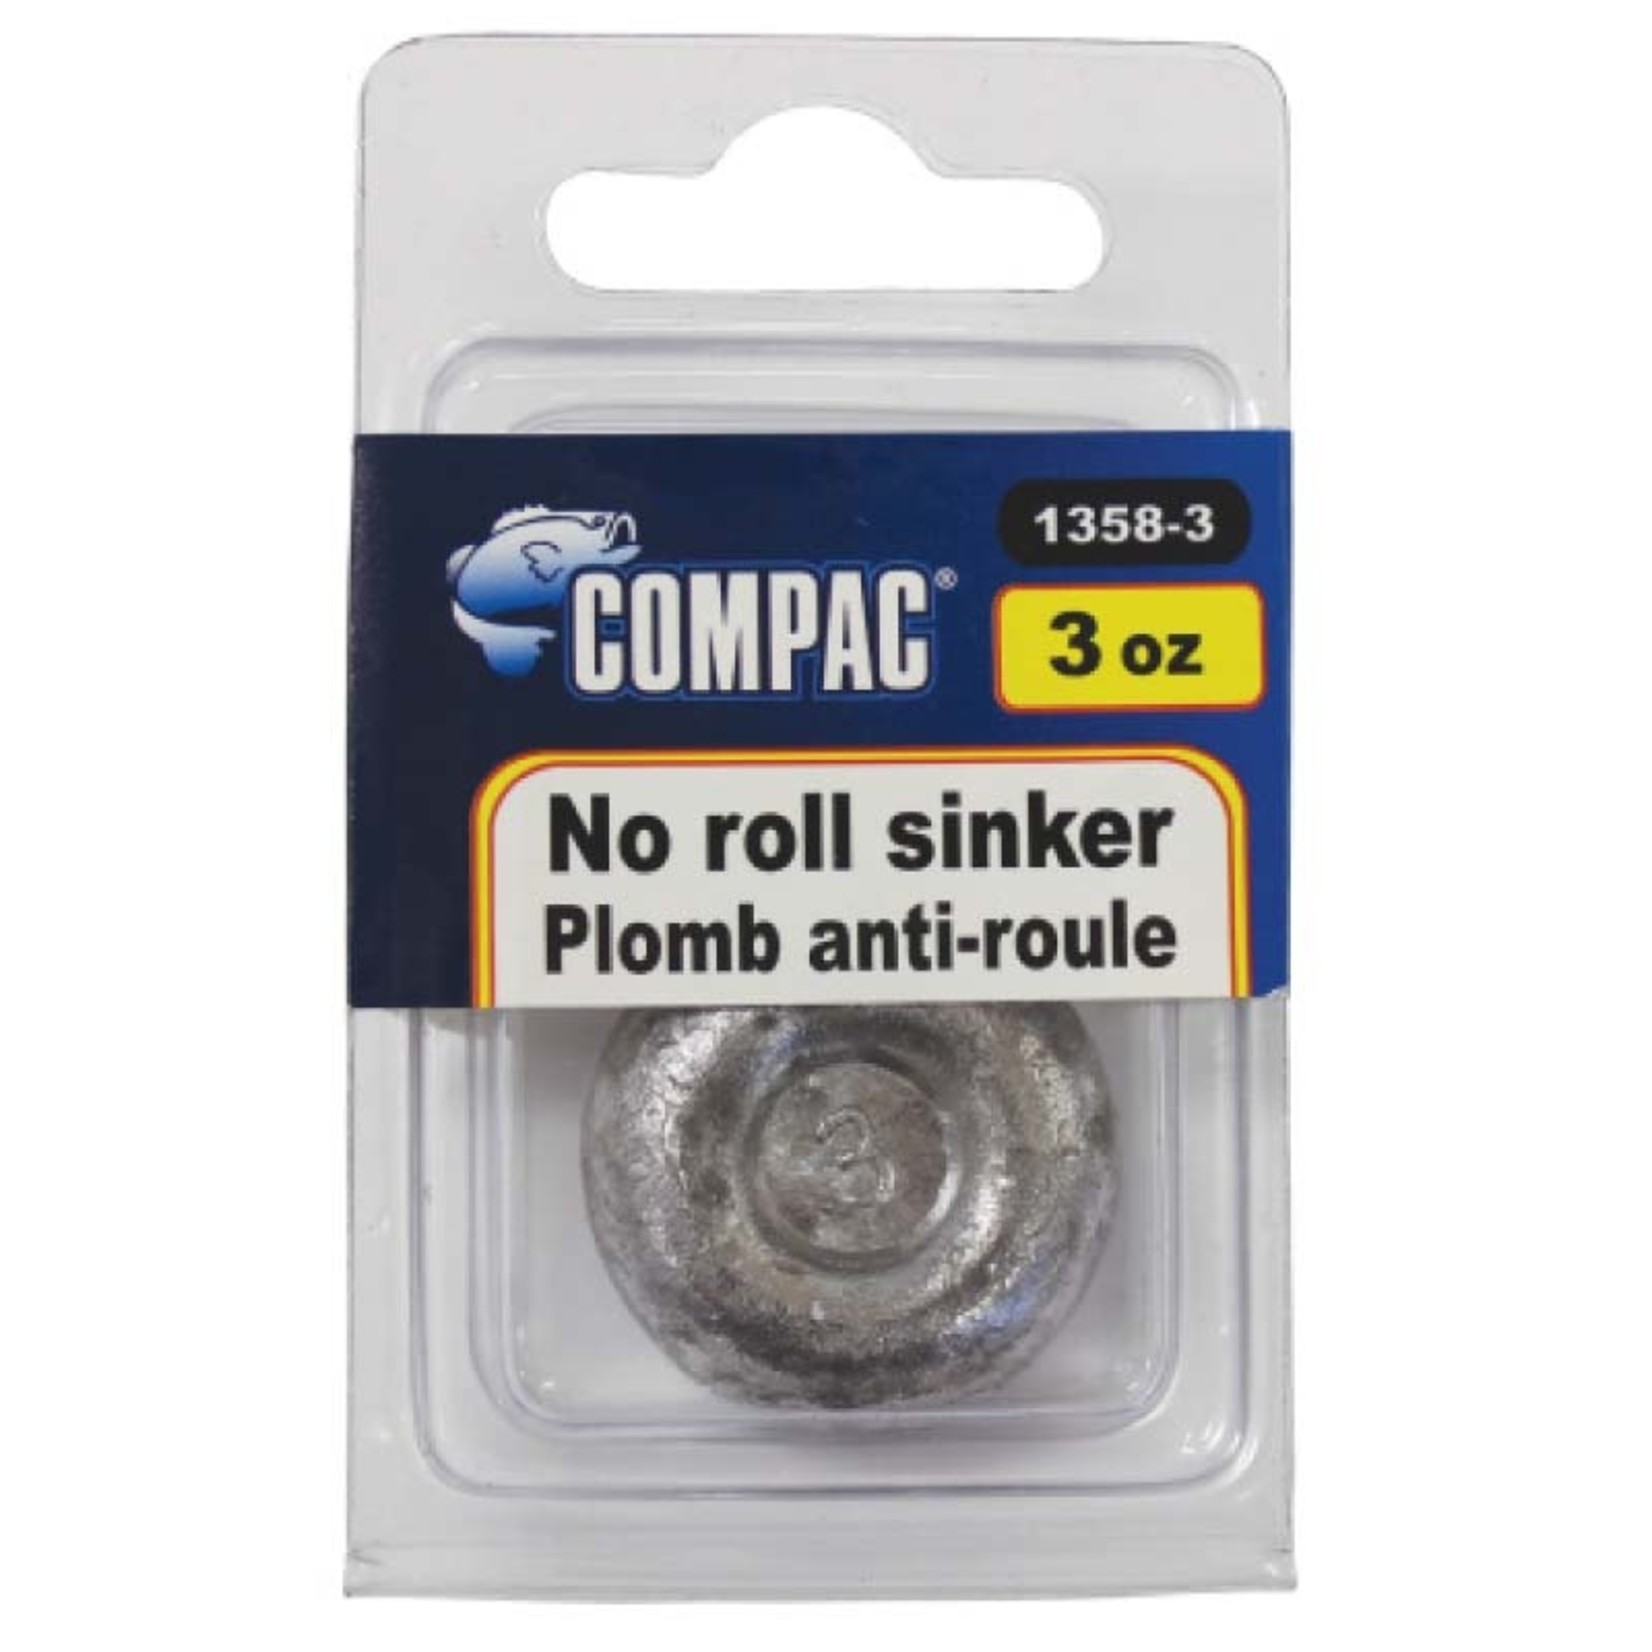 Compac Compac No roll sinkers